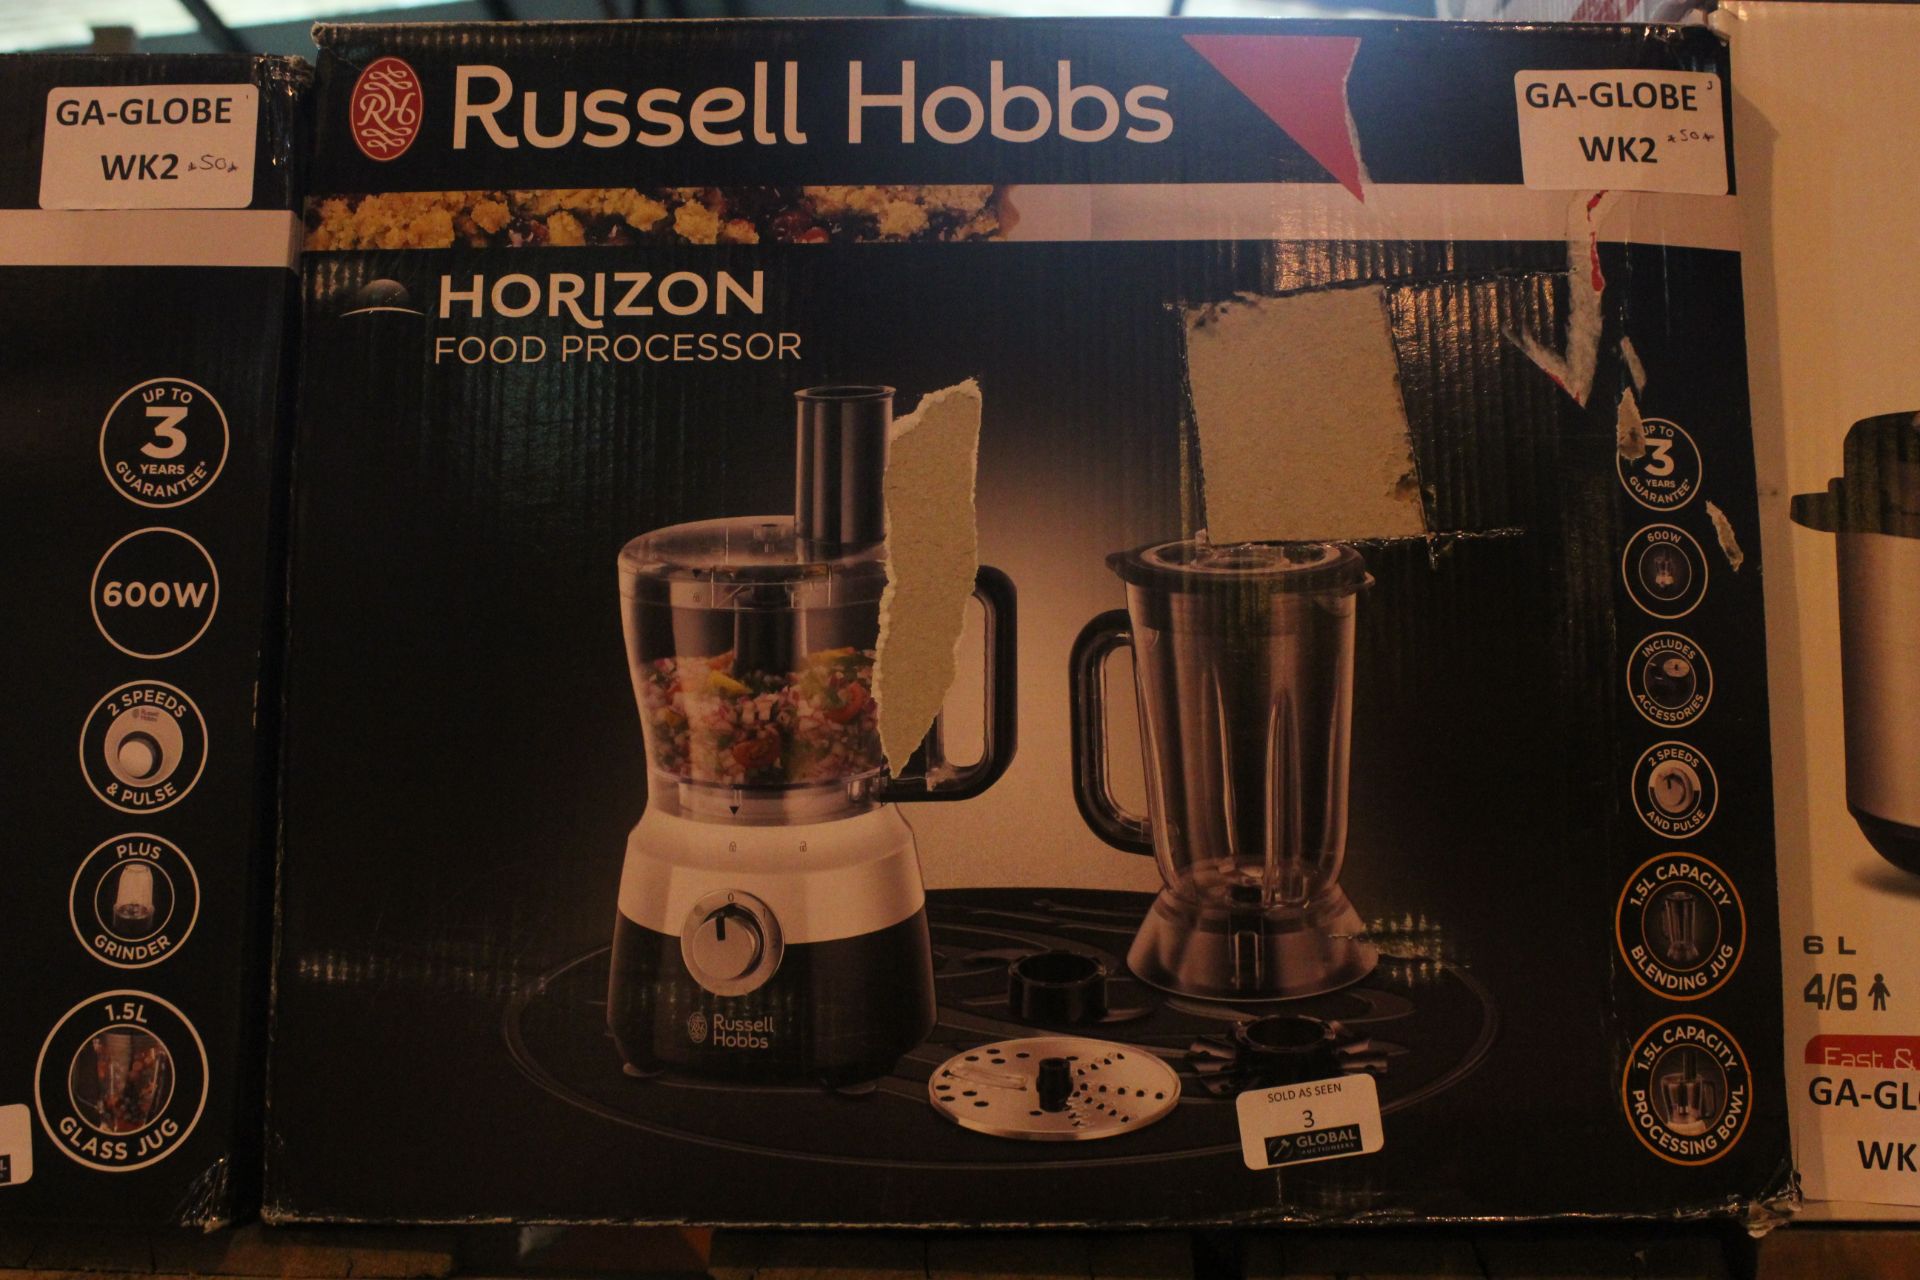 Russell Hobbs Horizon Food Processor RRP £50 (Untested/Customer Returns)